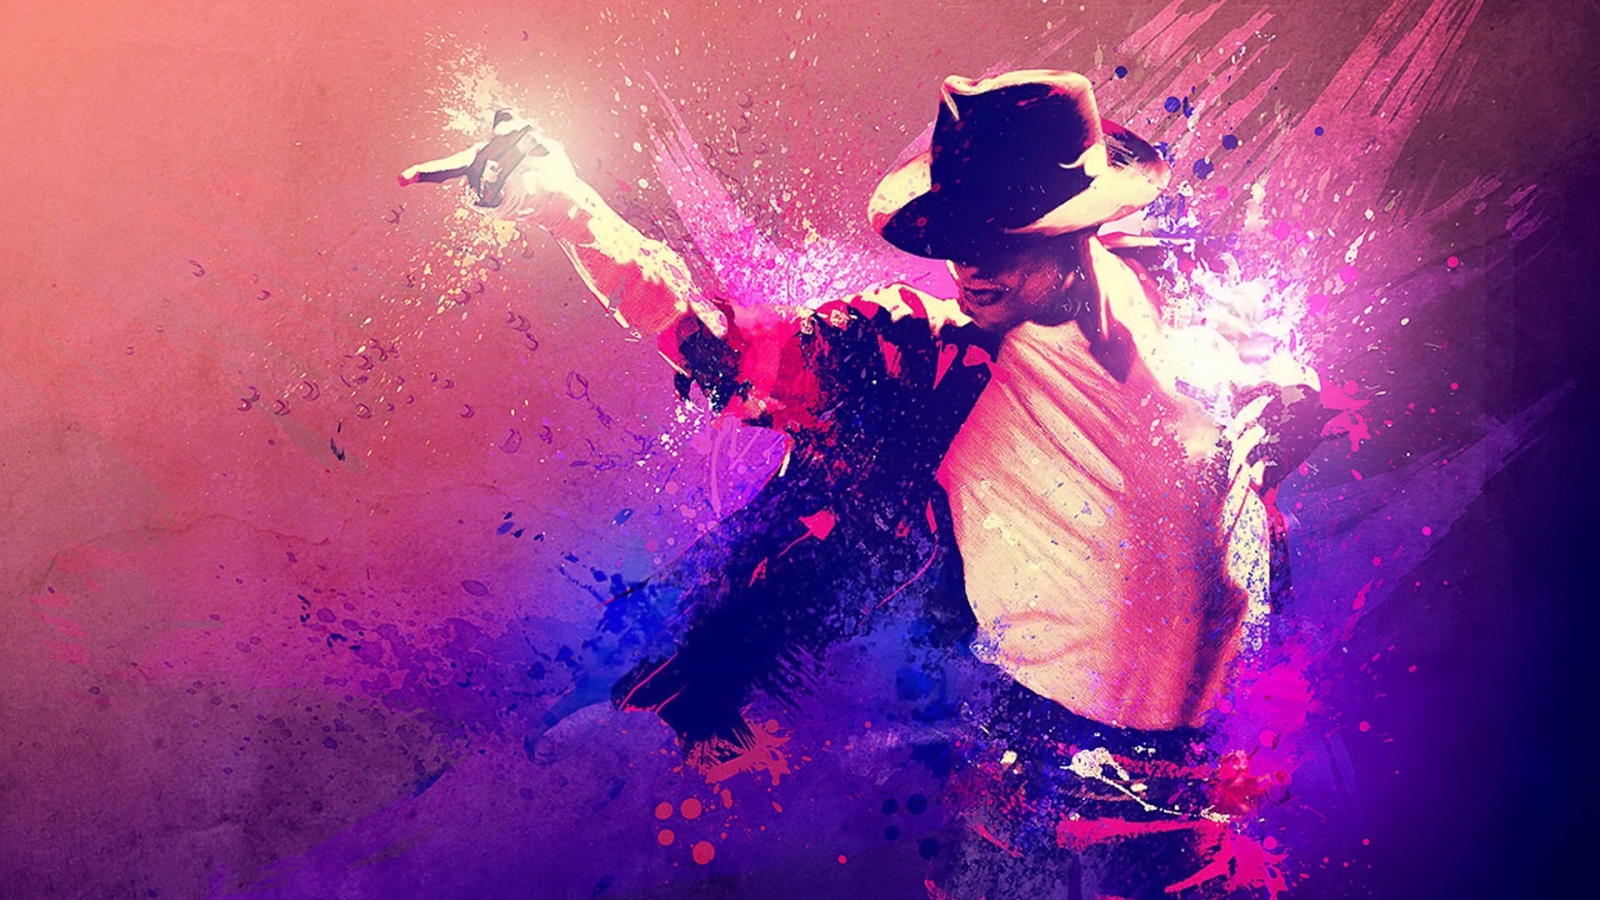 Michael Jackson Fanart for 1600 x 900 HDTV resolution